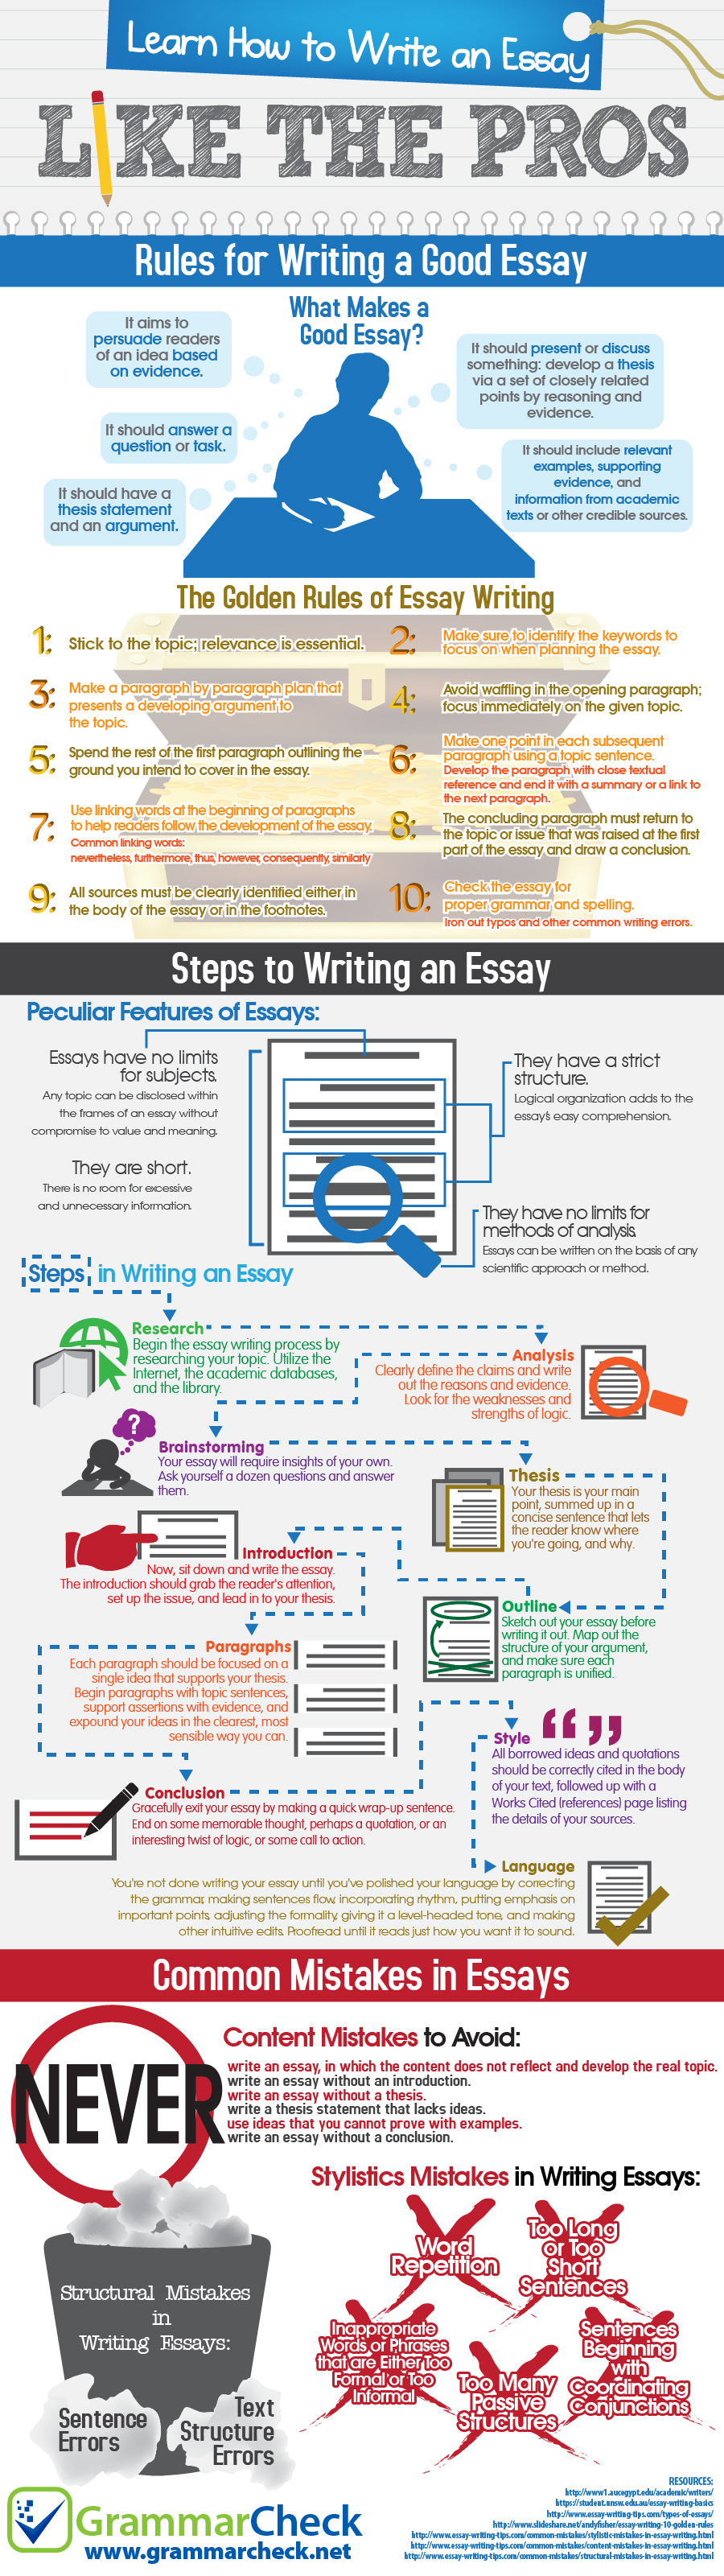 how to write an good essay for exam